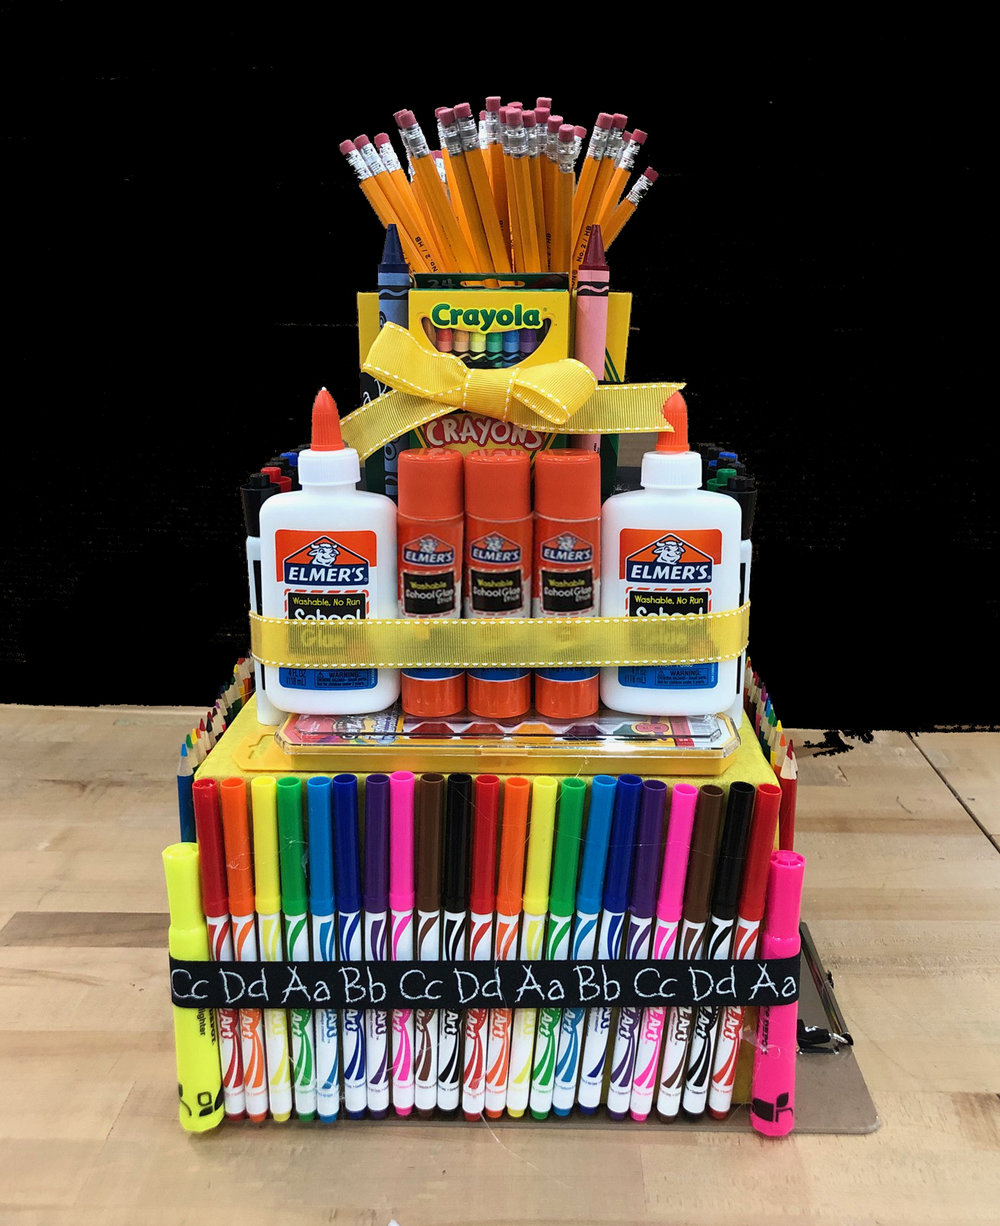 Glue Sticks and School Glue — Campus Survival Kits and Insta-Kits